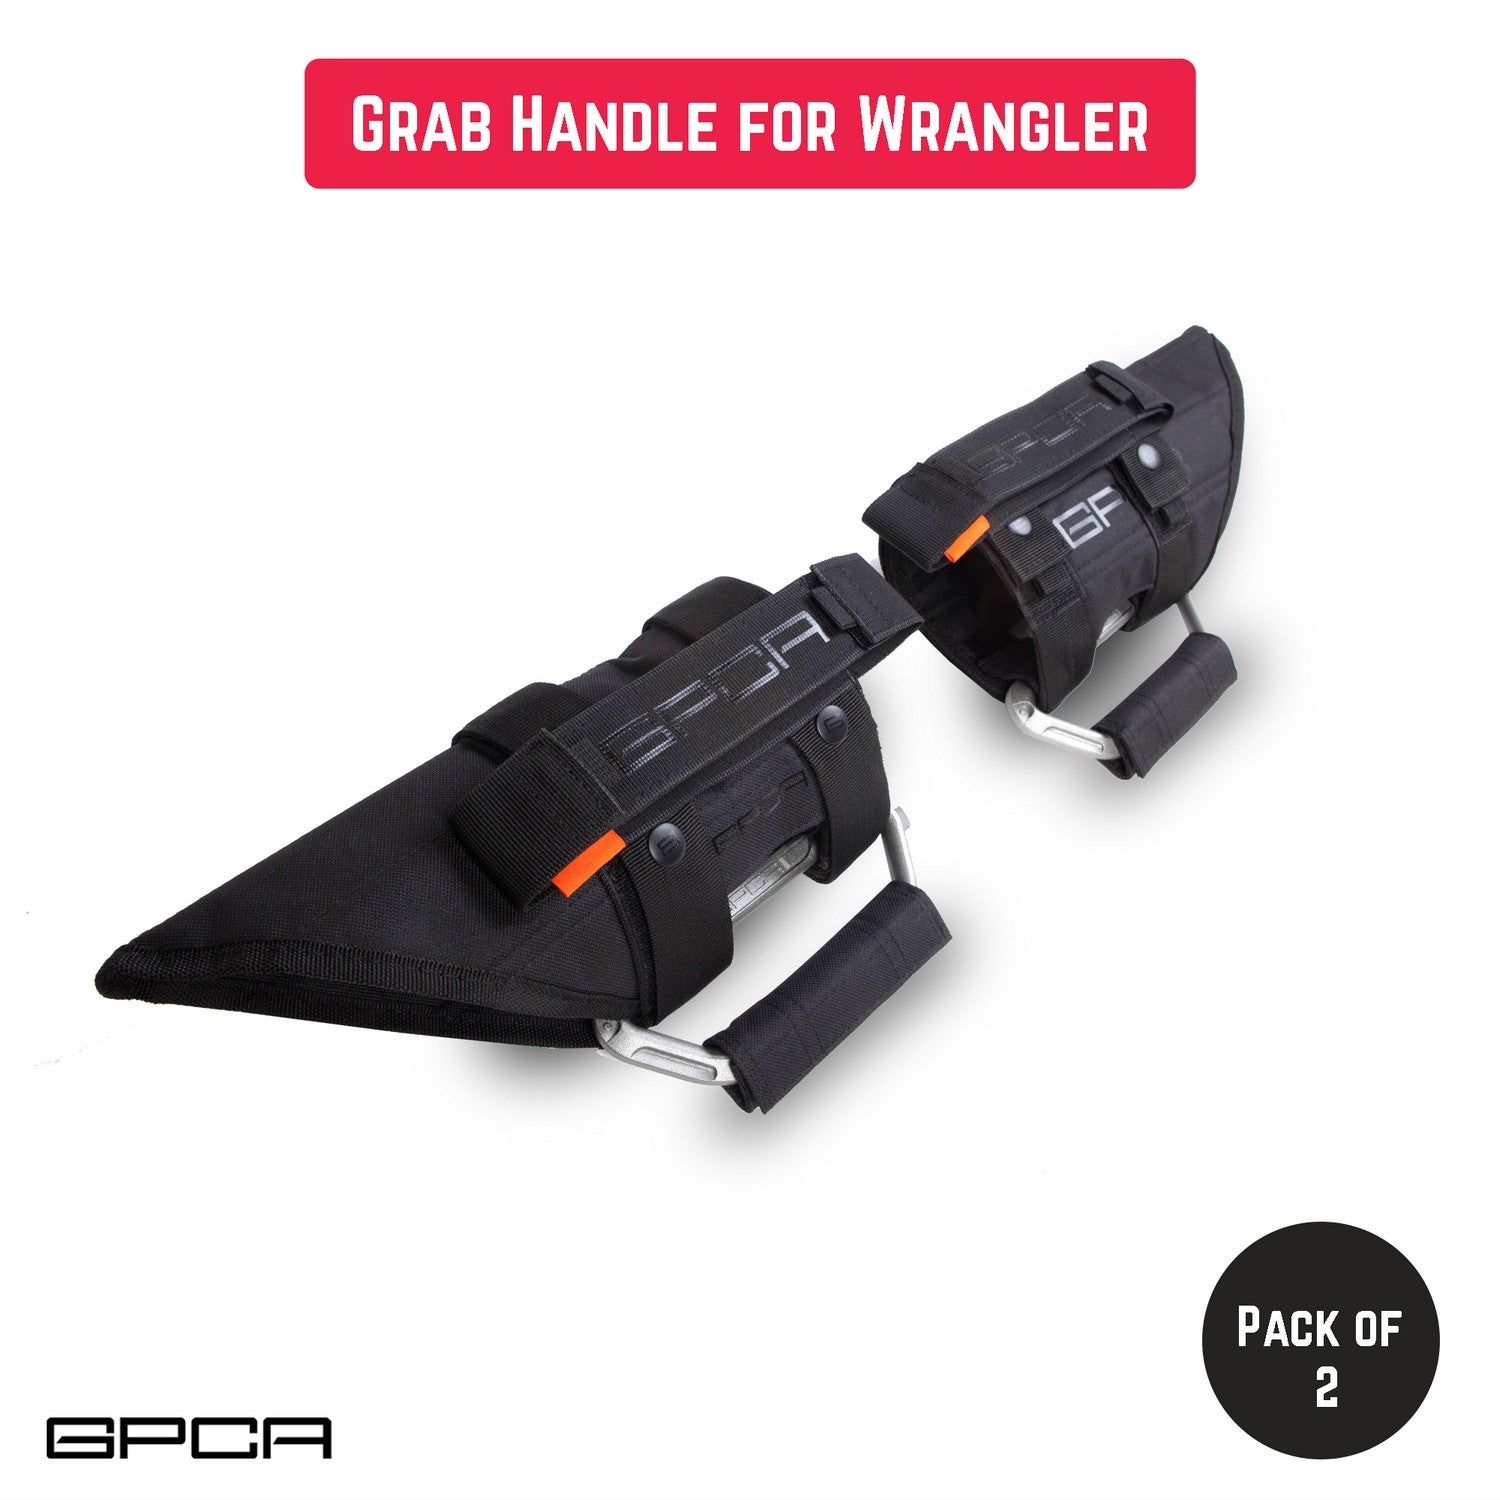 GPCA GP Grip PRO, Grab handle for Wrangler